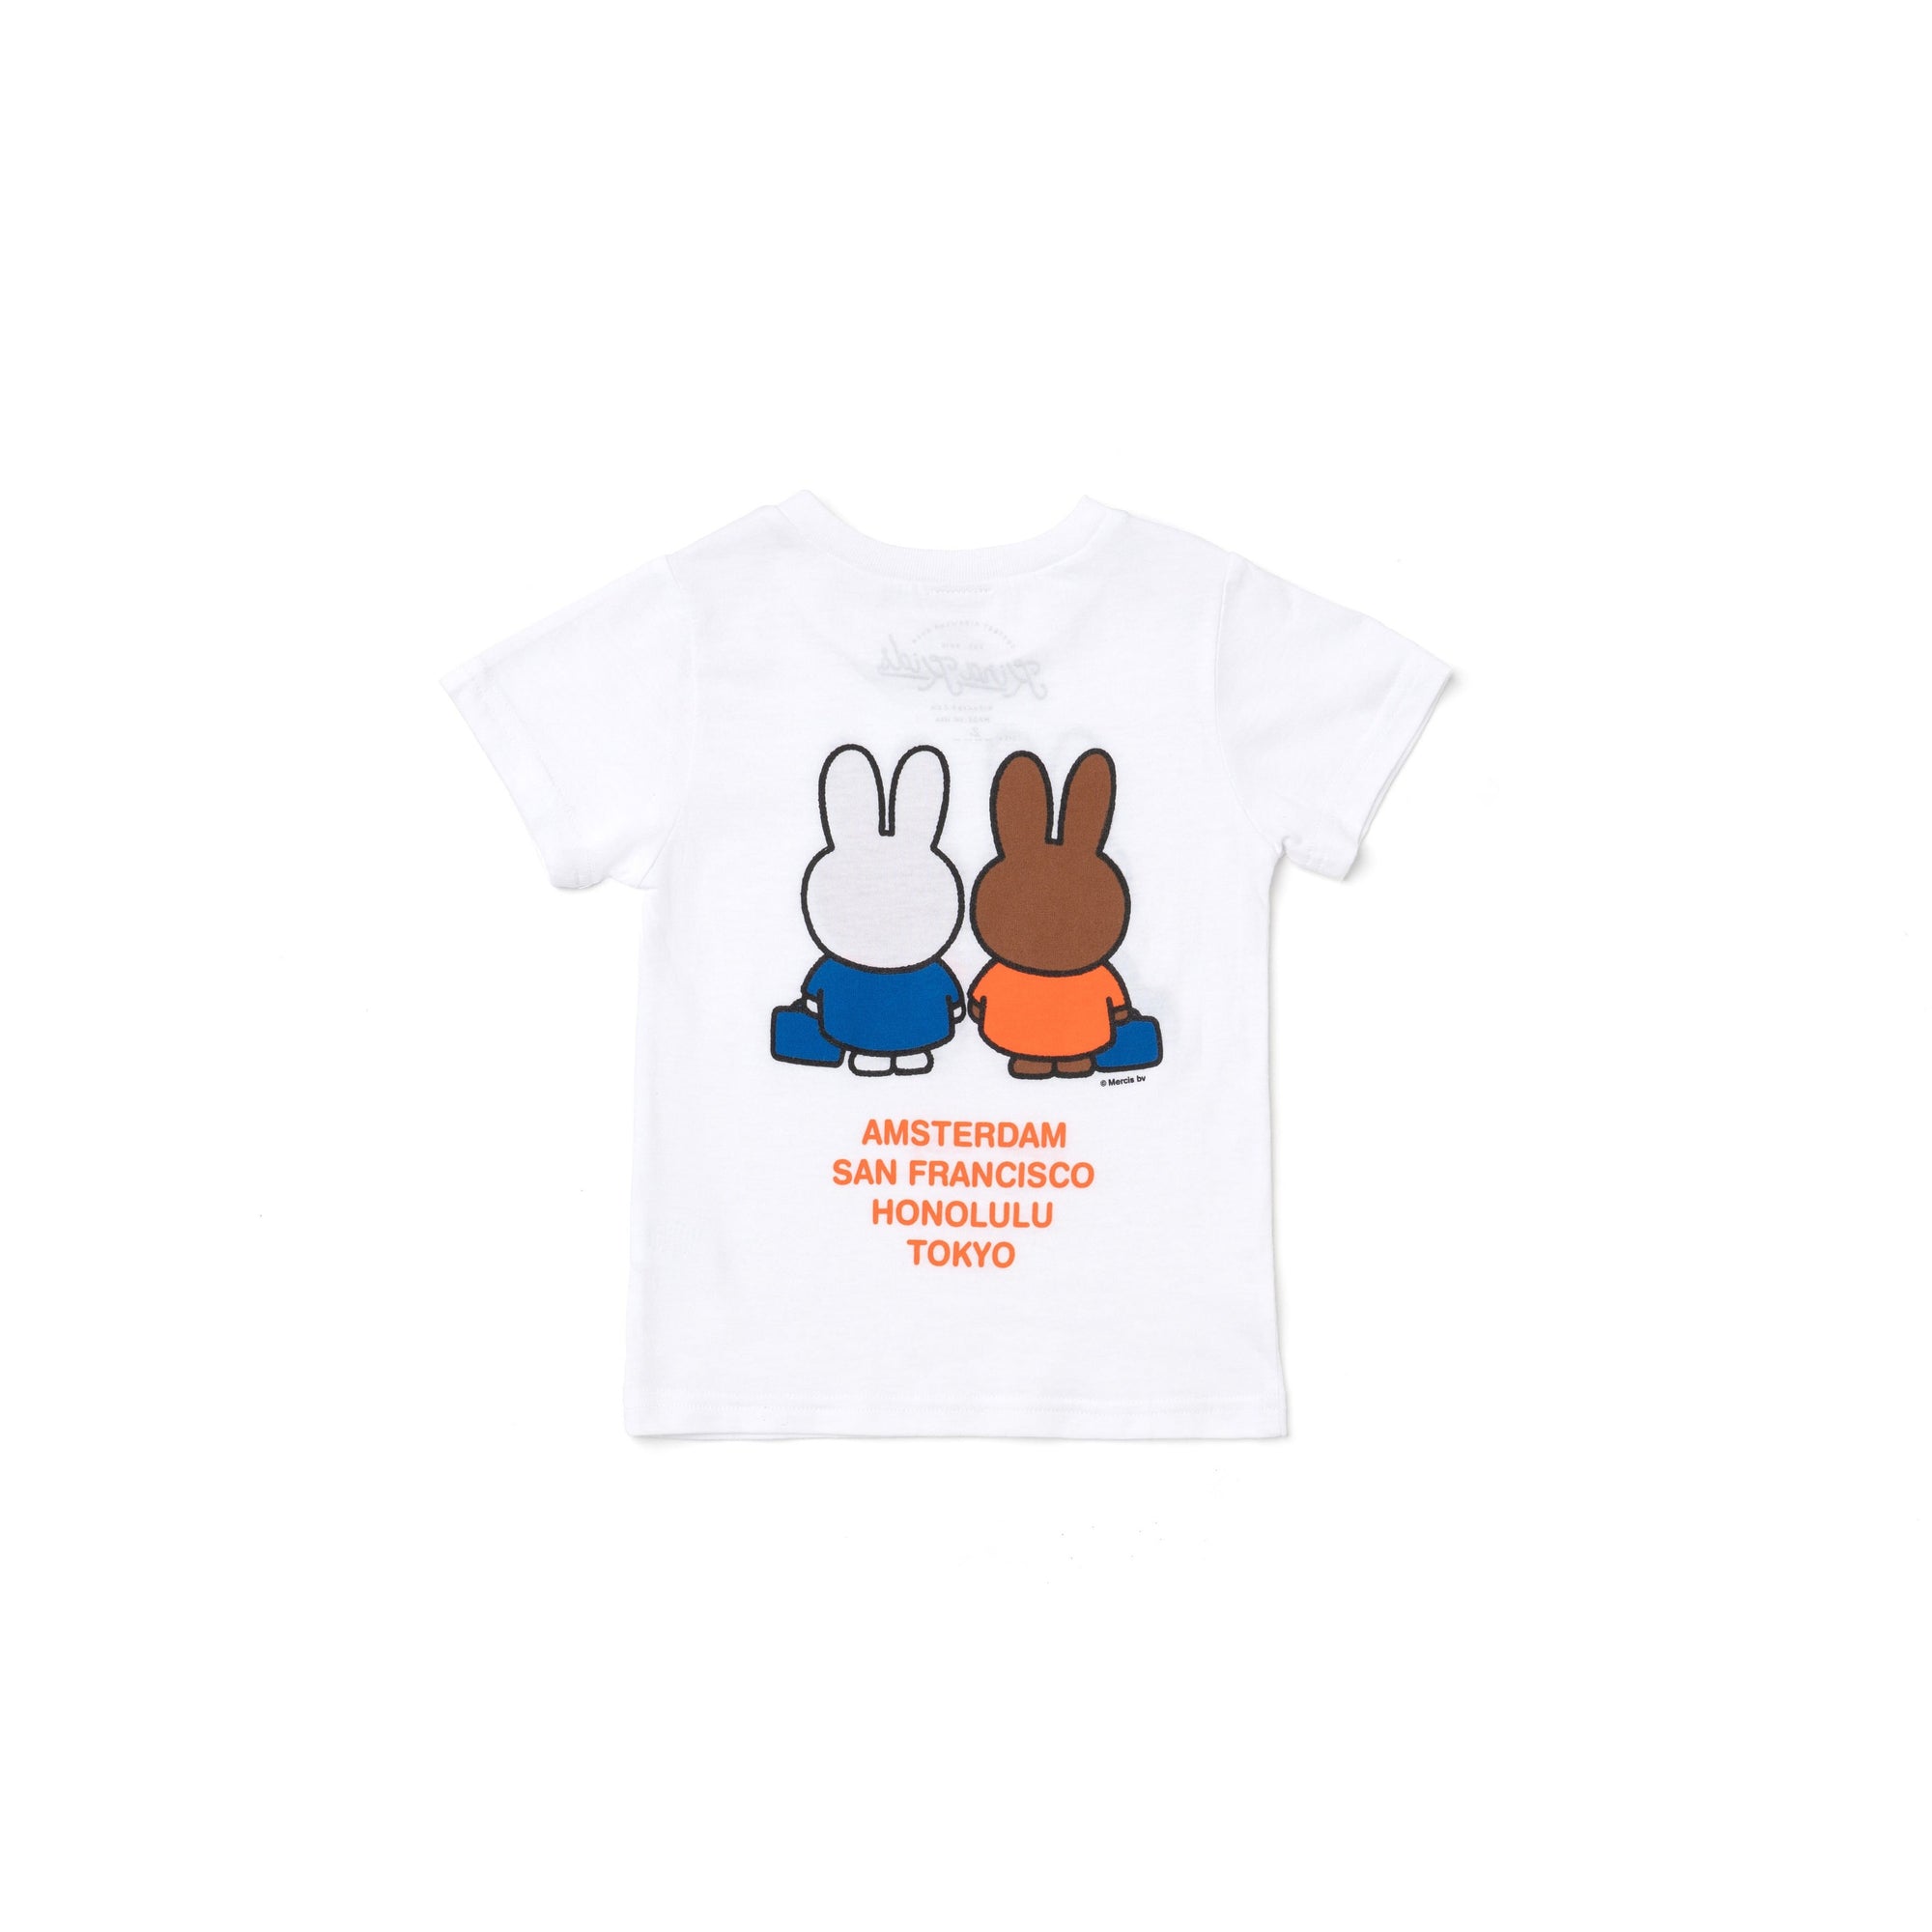 Miffy & Melanie T-shirt, White by Kira